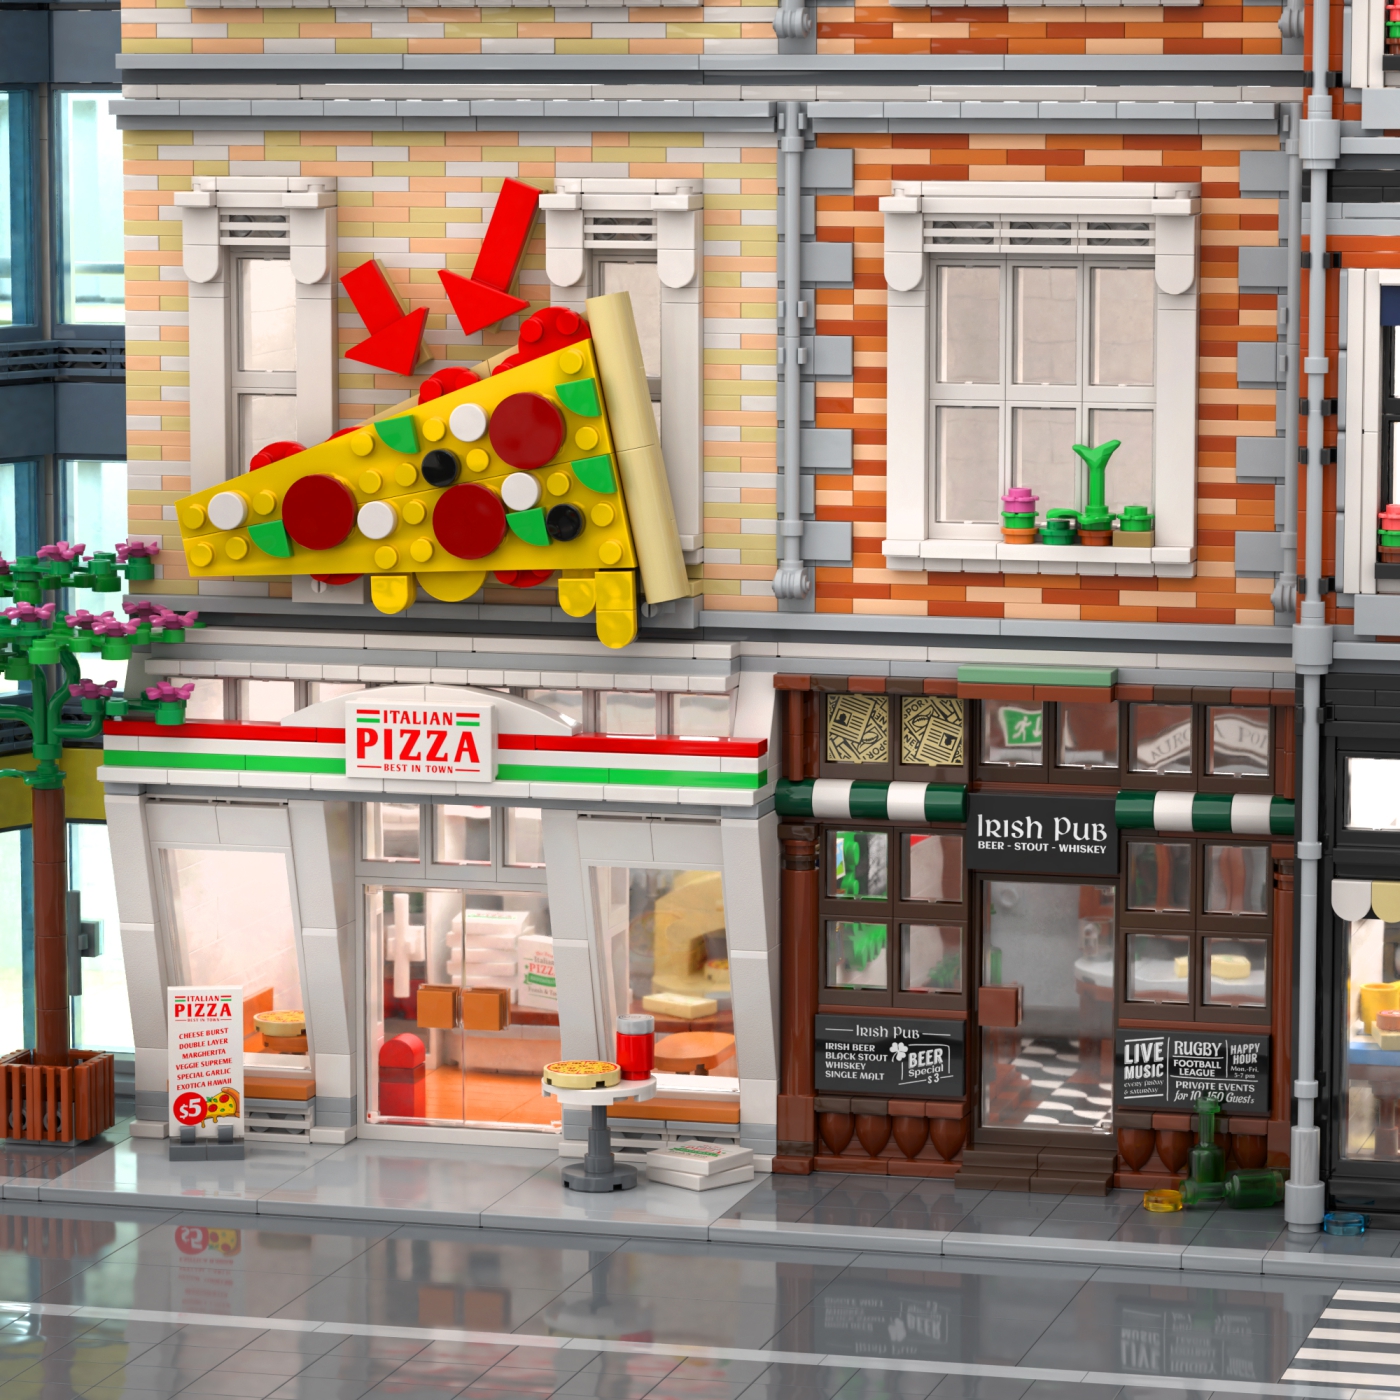 Pizza Station and Irish Pub